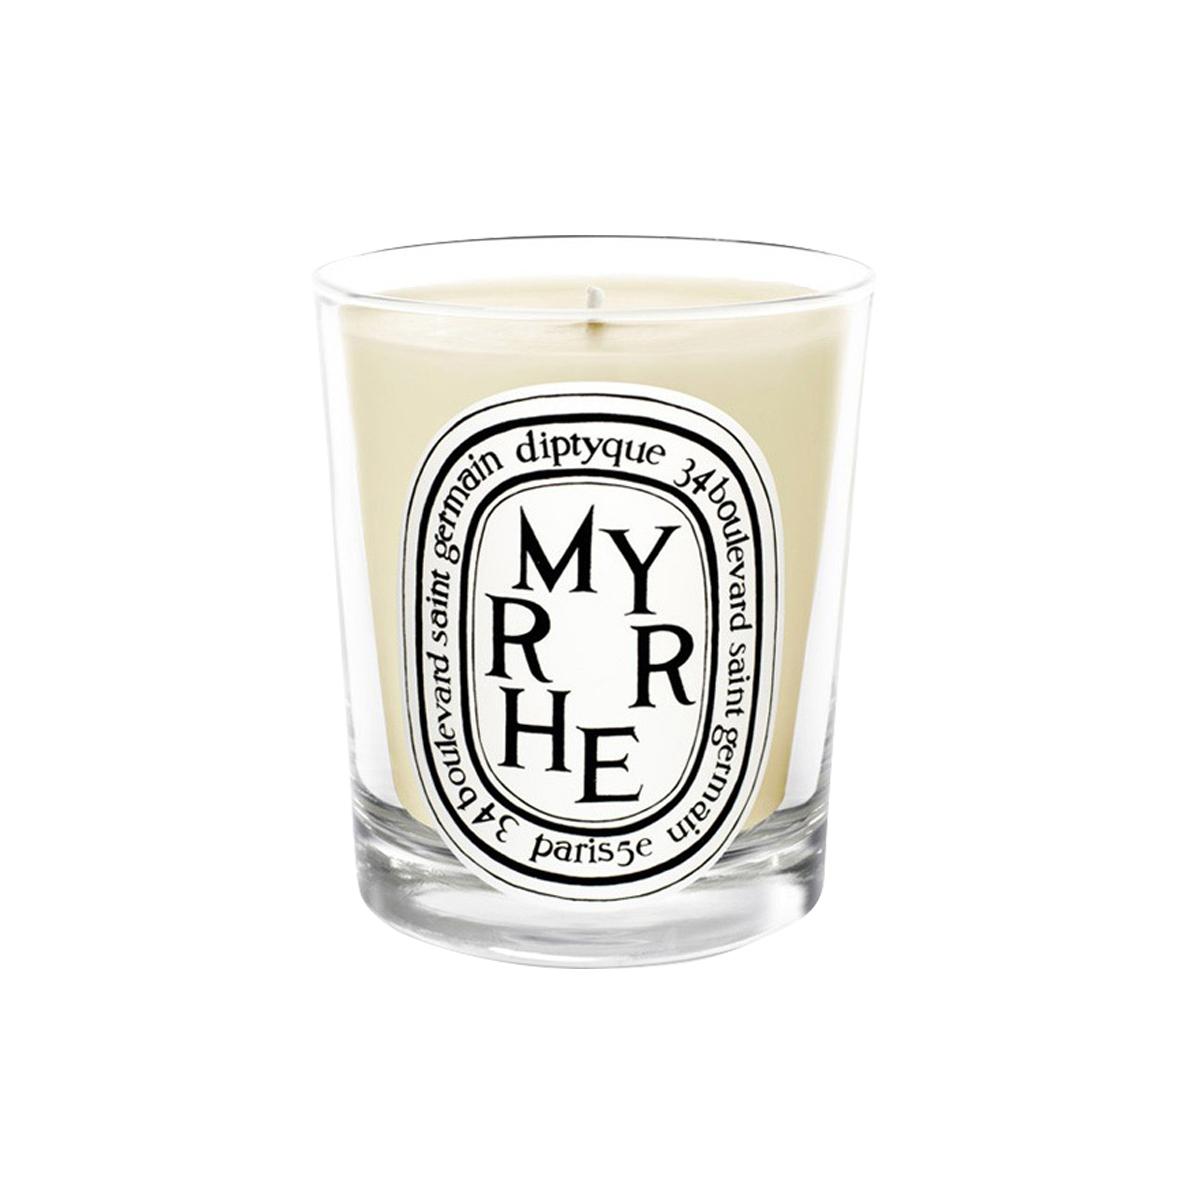 Primary image of Myrrhe (Myrrh) Candle